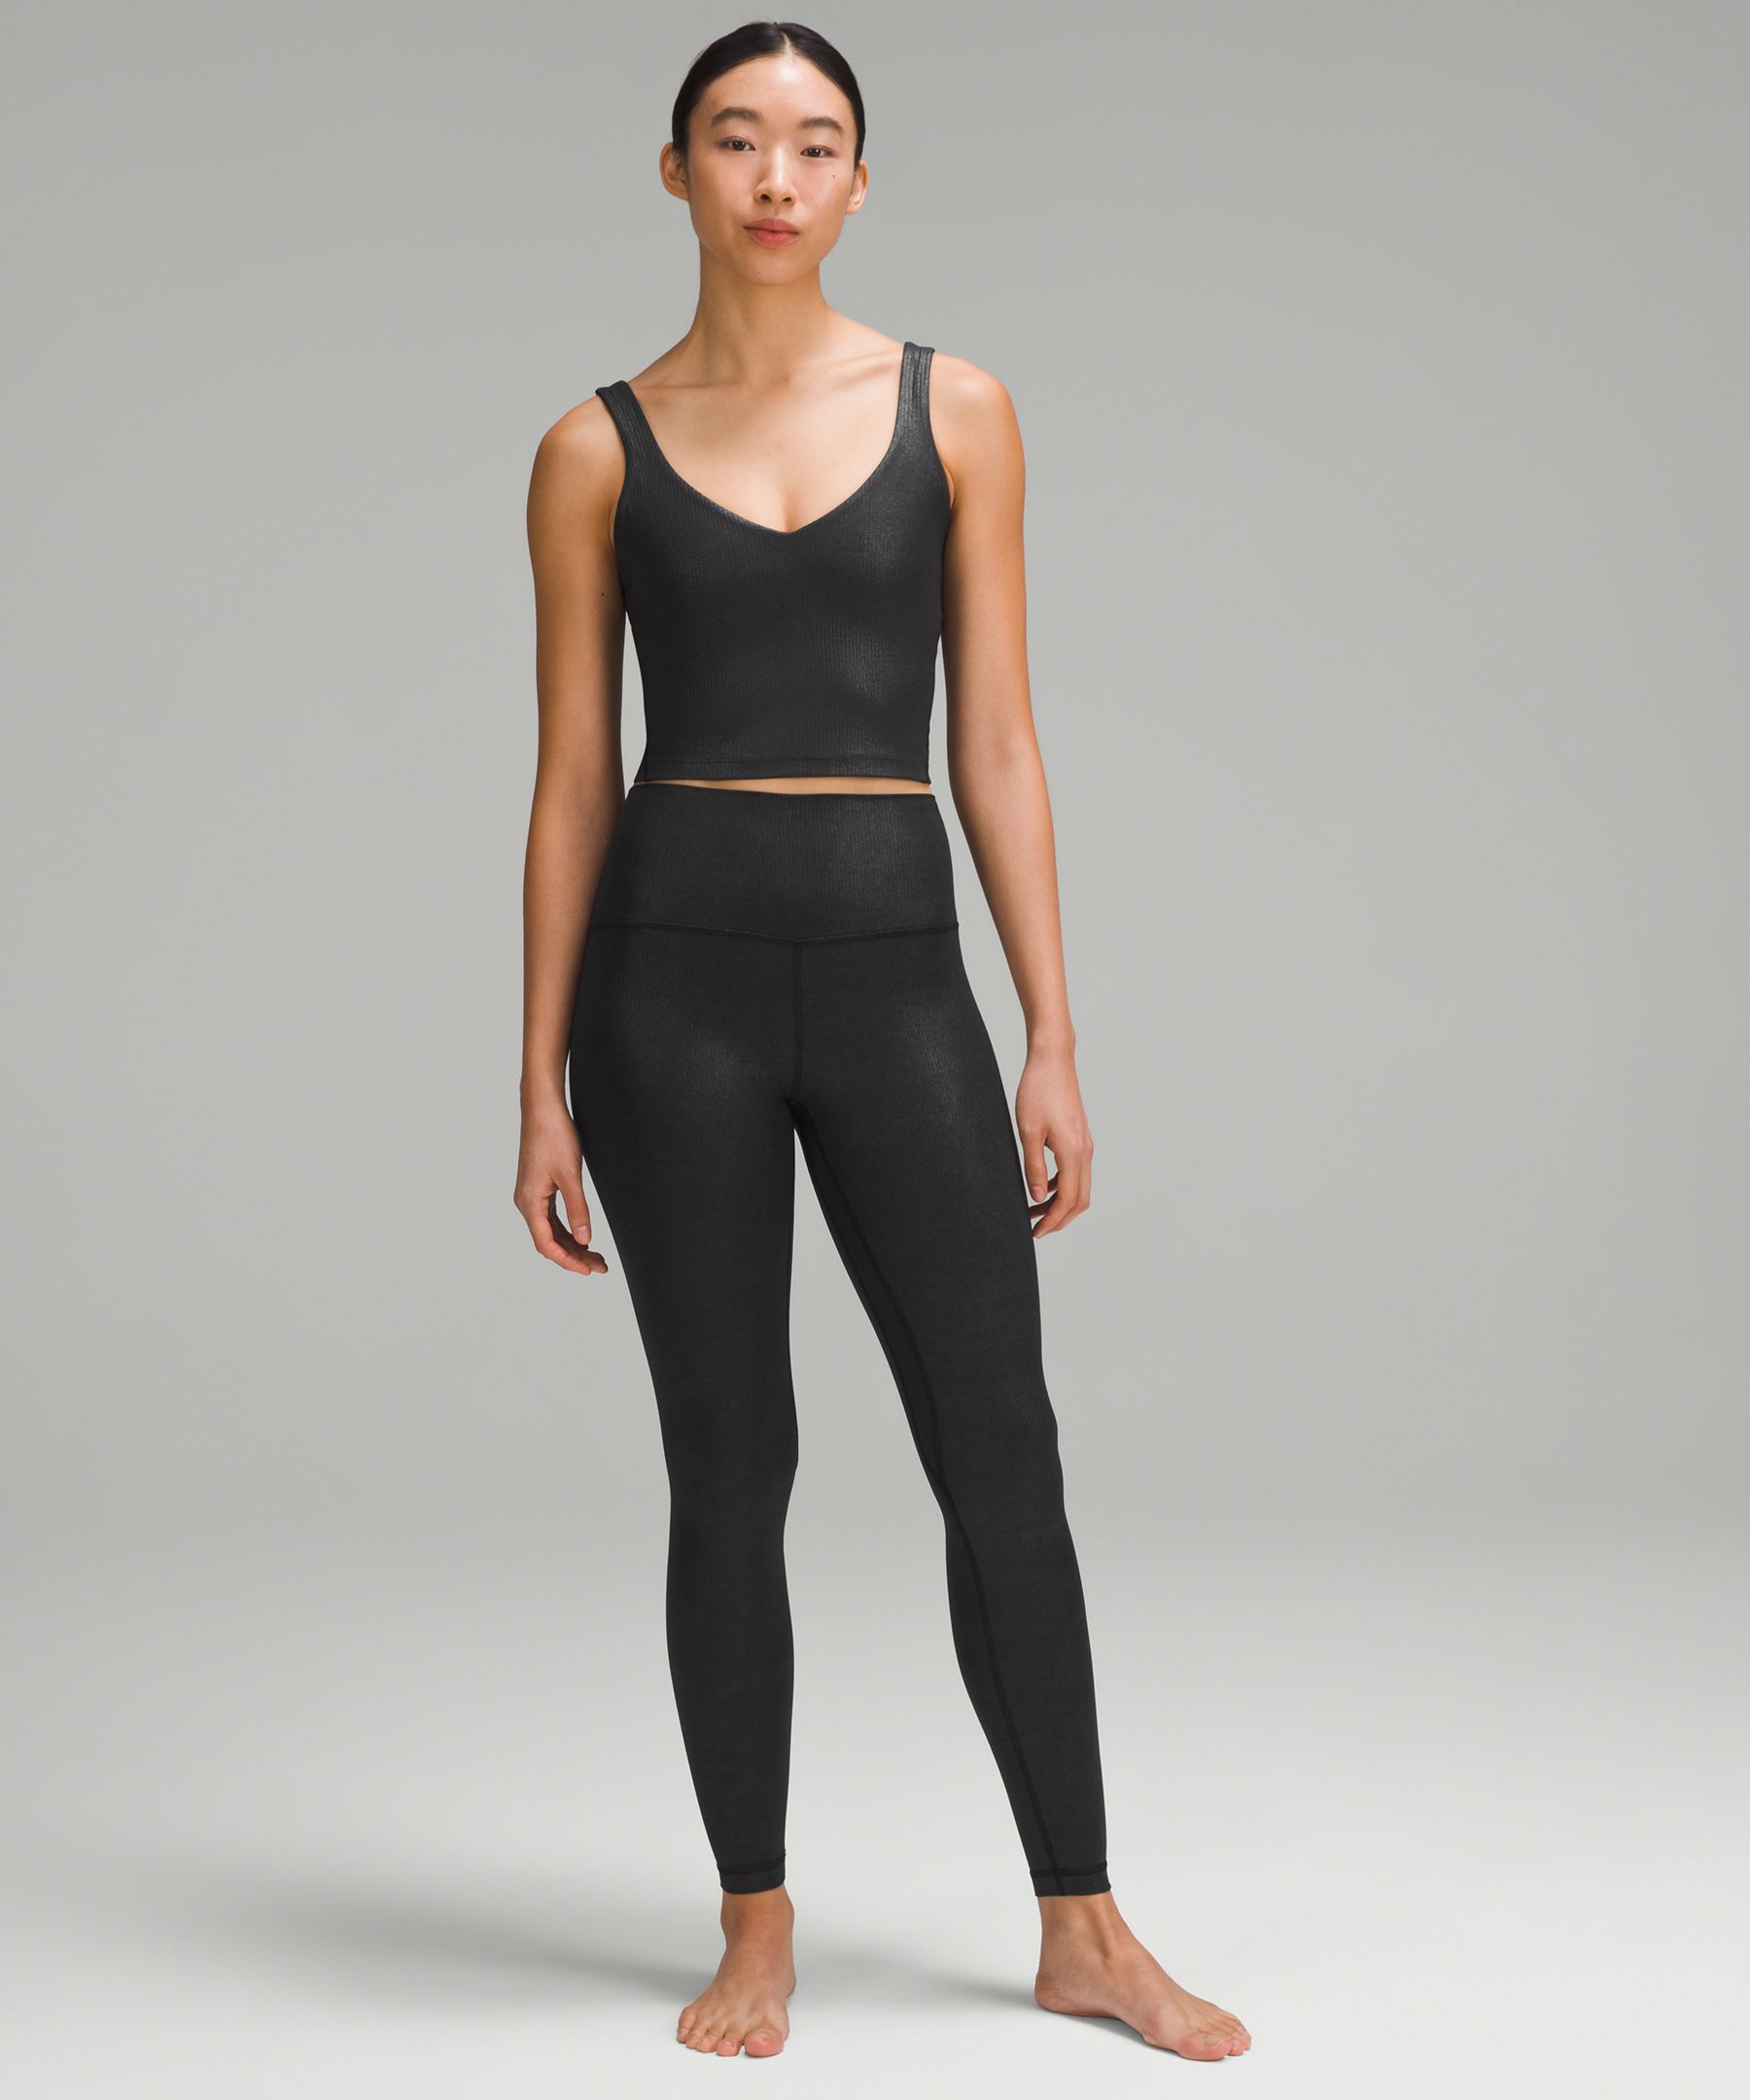 Lululemon Align full length 28” Pants Floral Black Size 2 - $68 (46% Off  Retail) - From Amanda